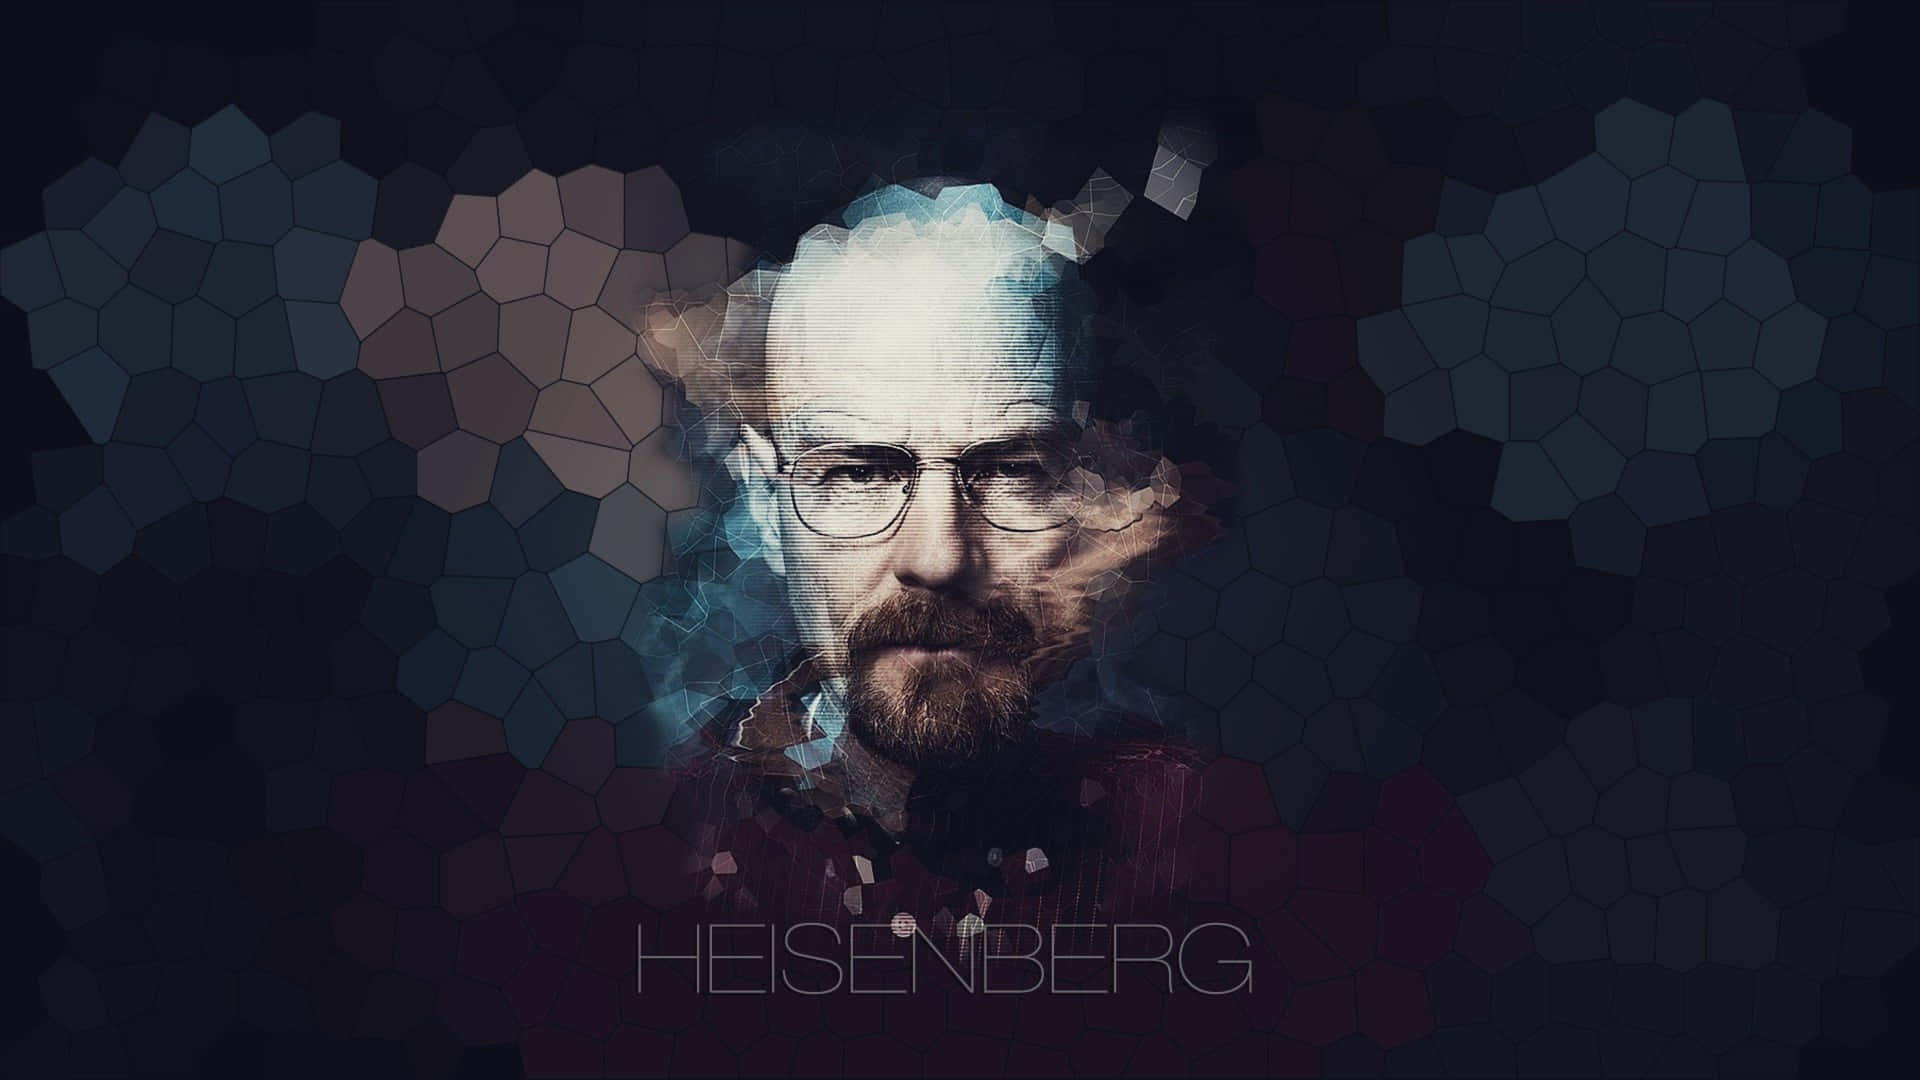 Heisenberg Abstract Artwork Background